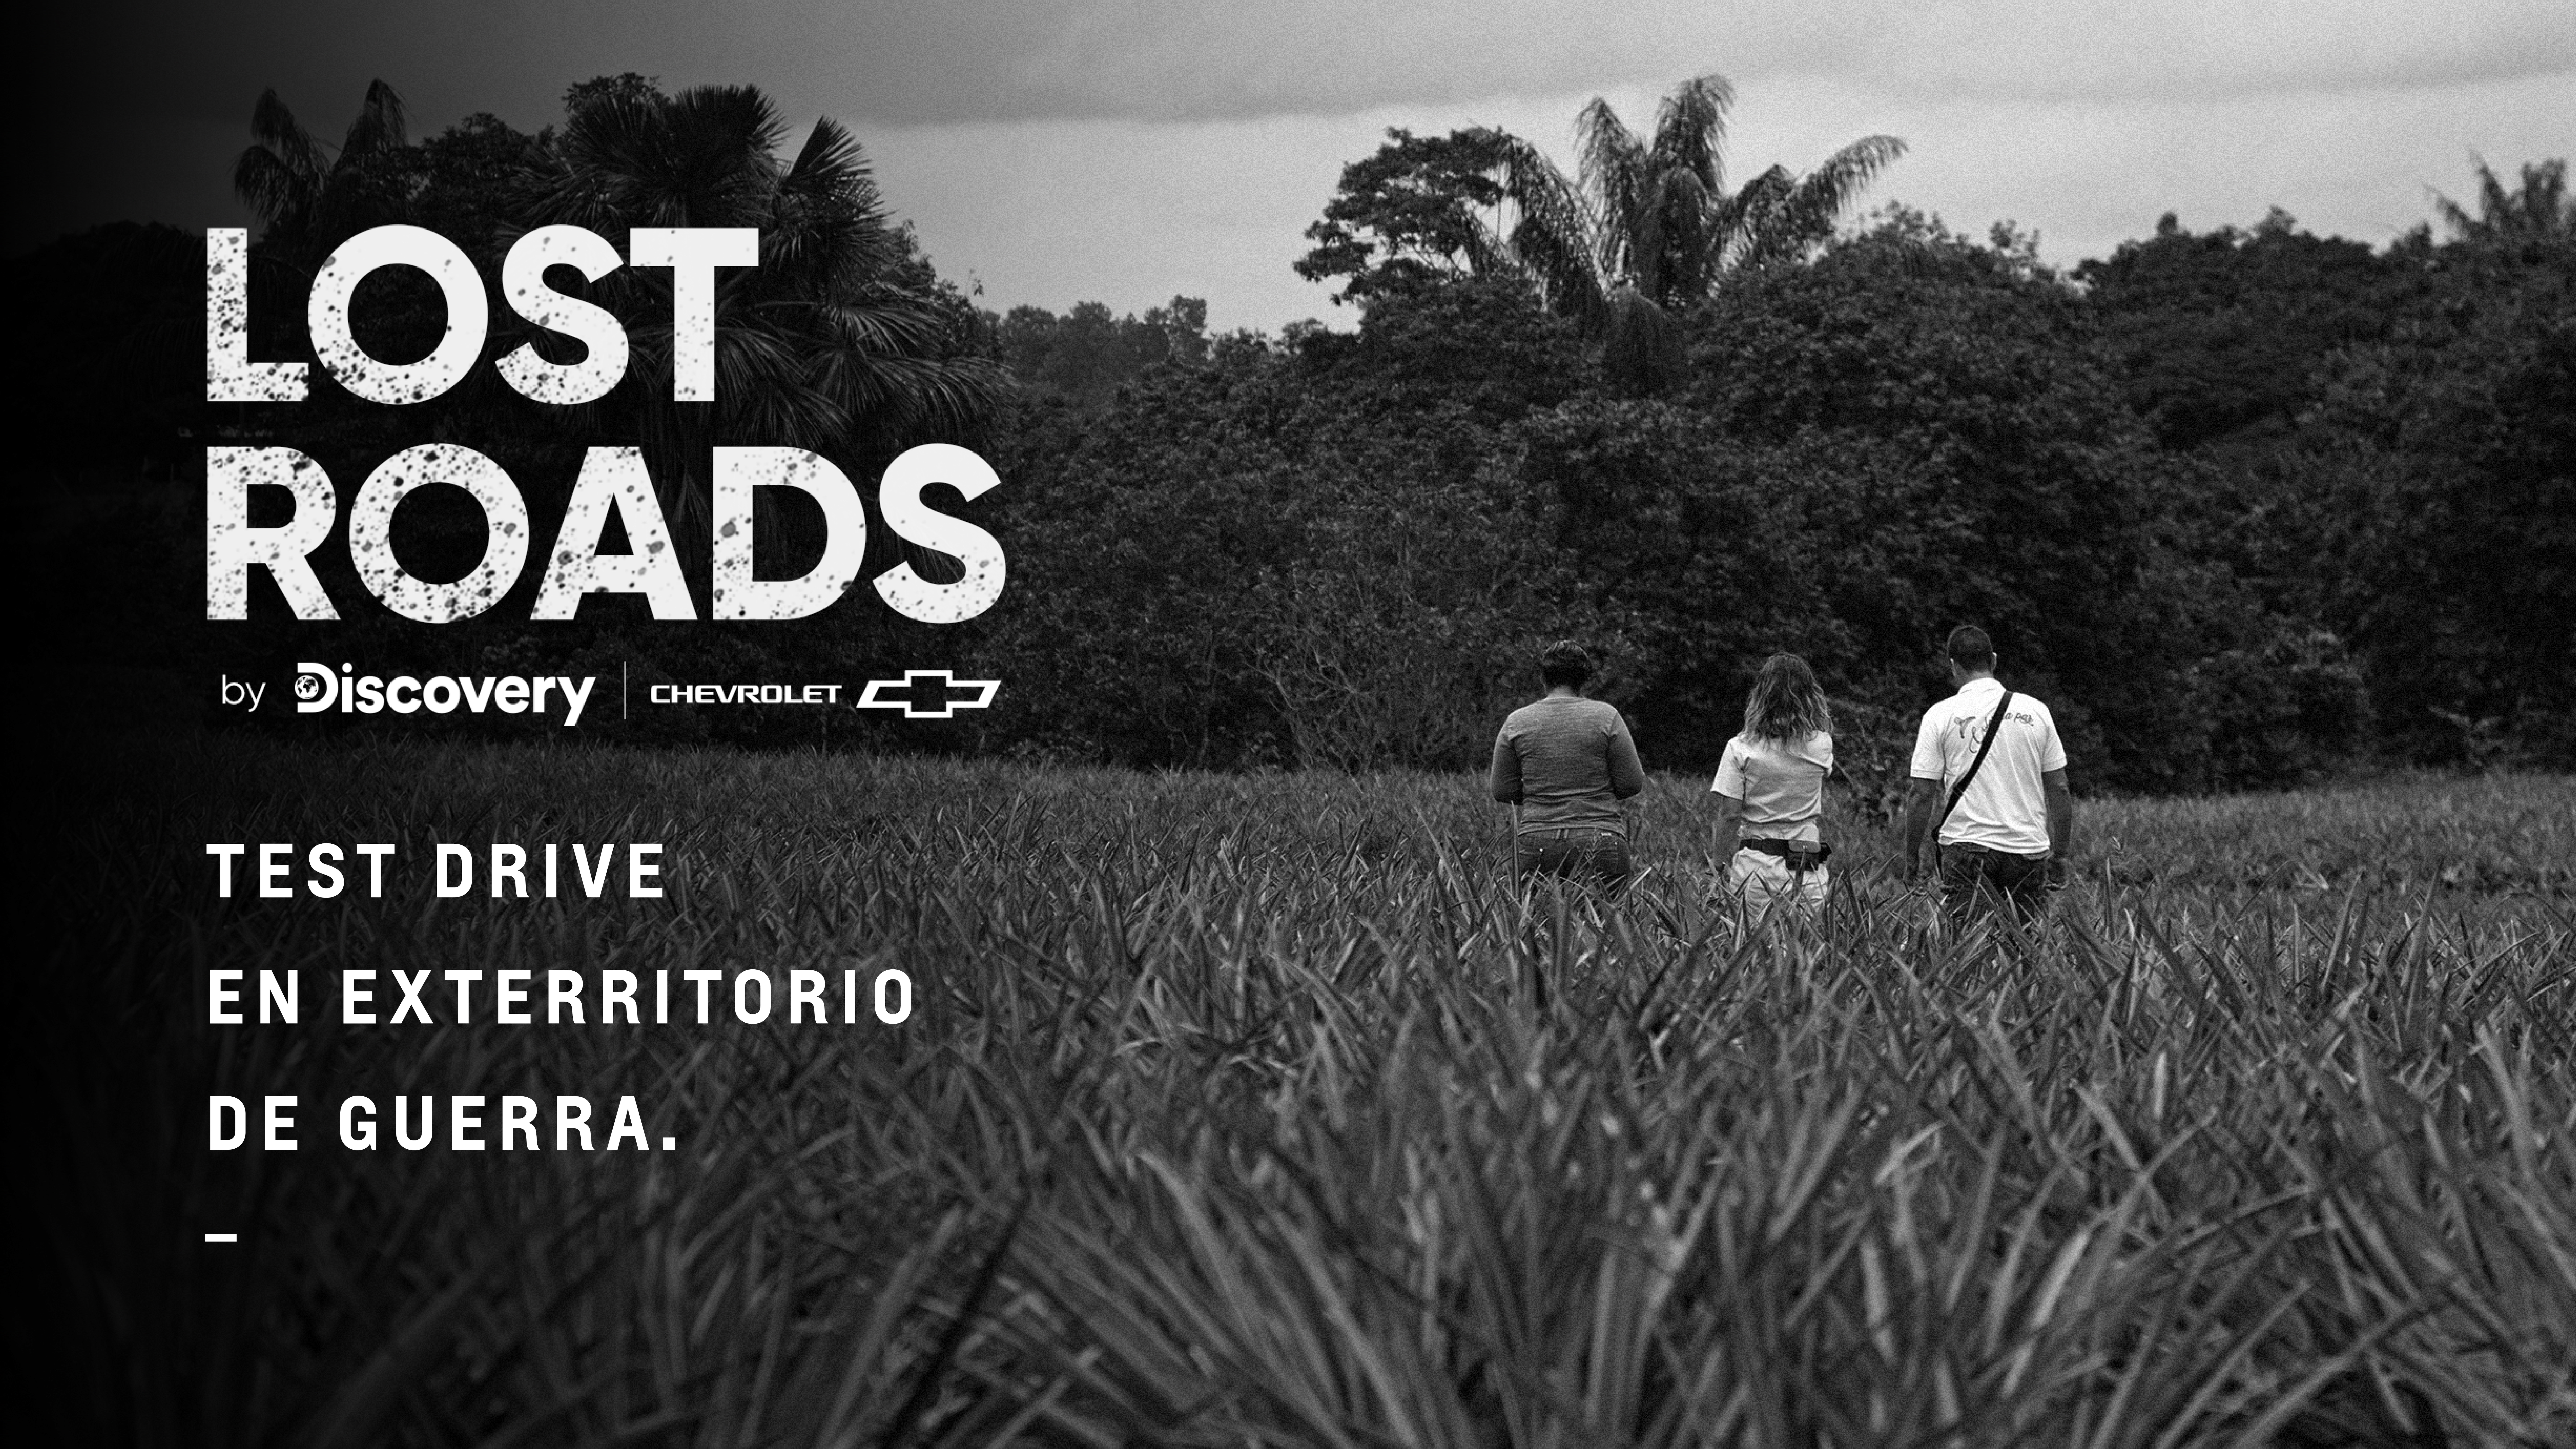 Lost Roads: Test drive en exterritorio de guerra